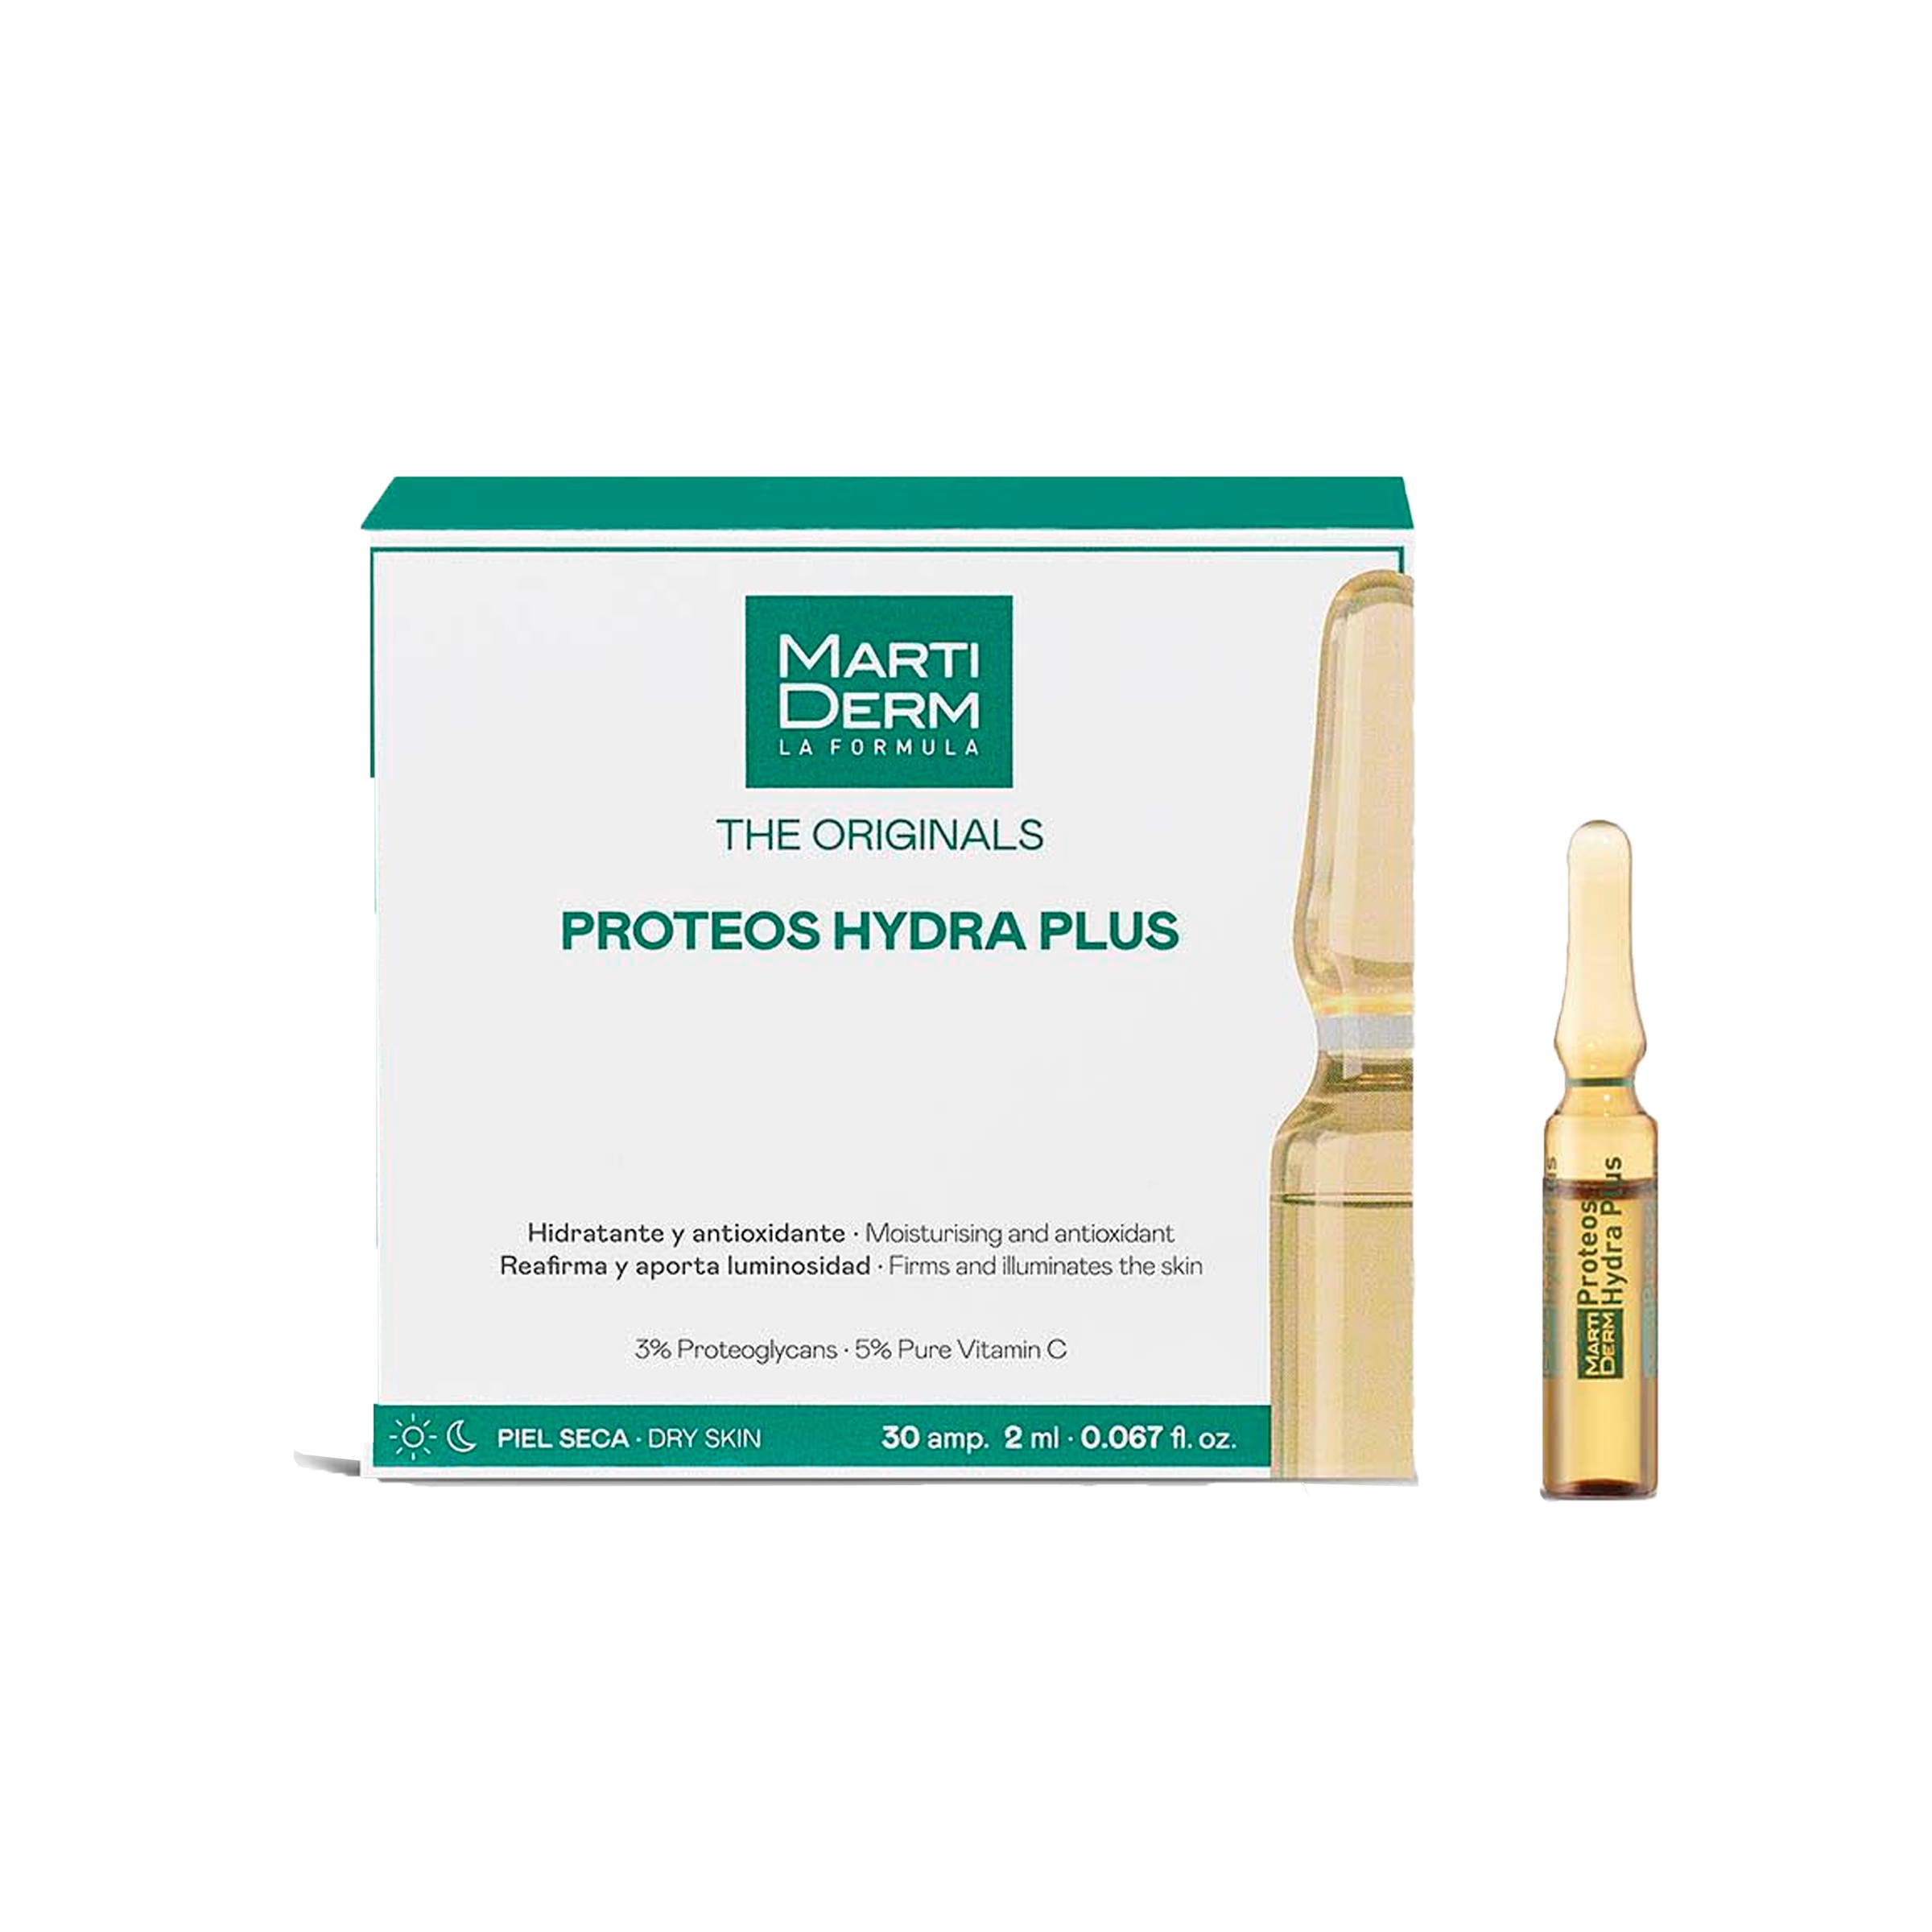 Martiderm Proteos Hydra Plus pele seca, 30 ampolas